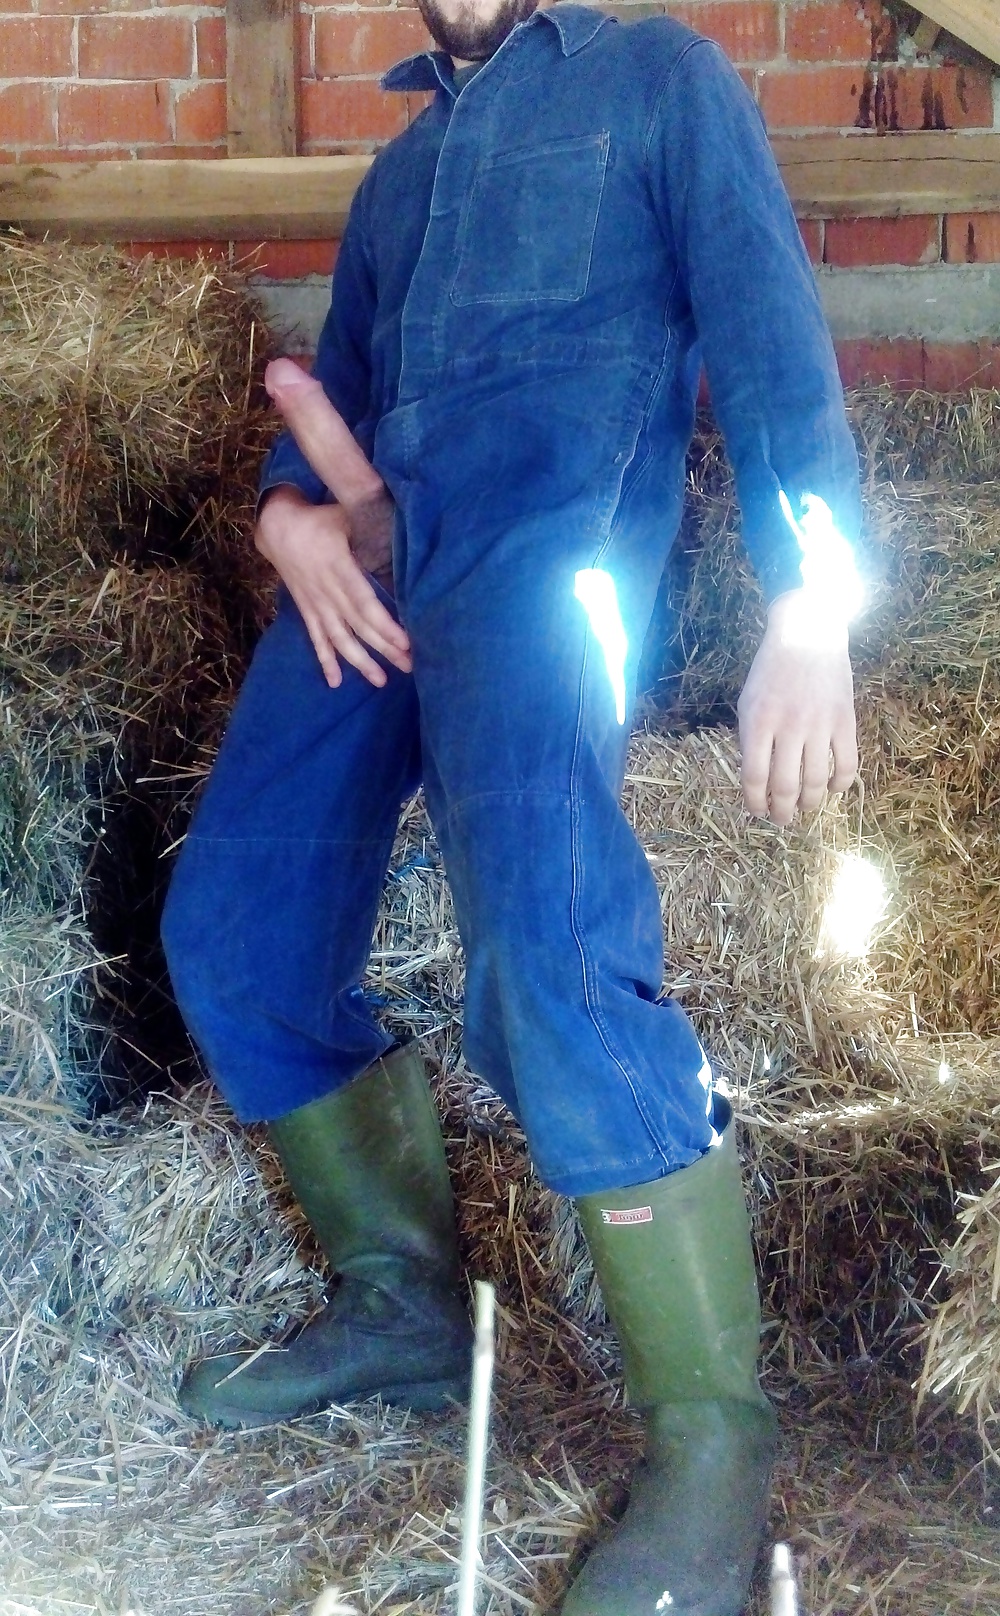 Farmer_jerking_off_dick_on_hay (12/13)